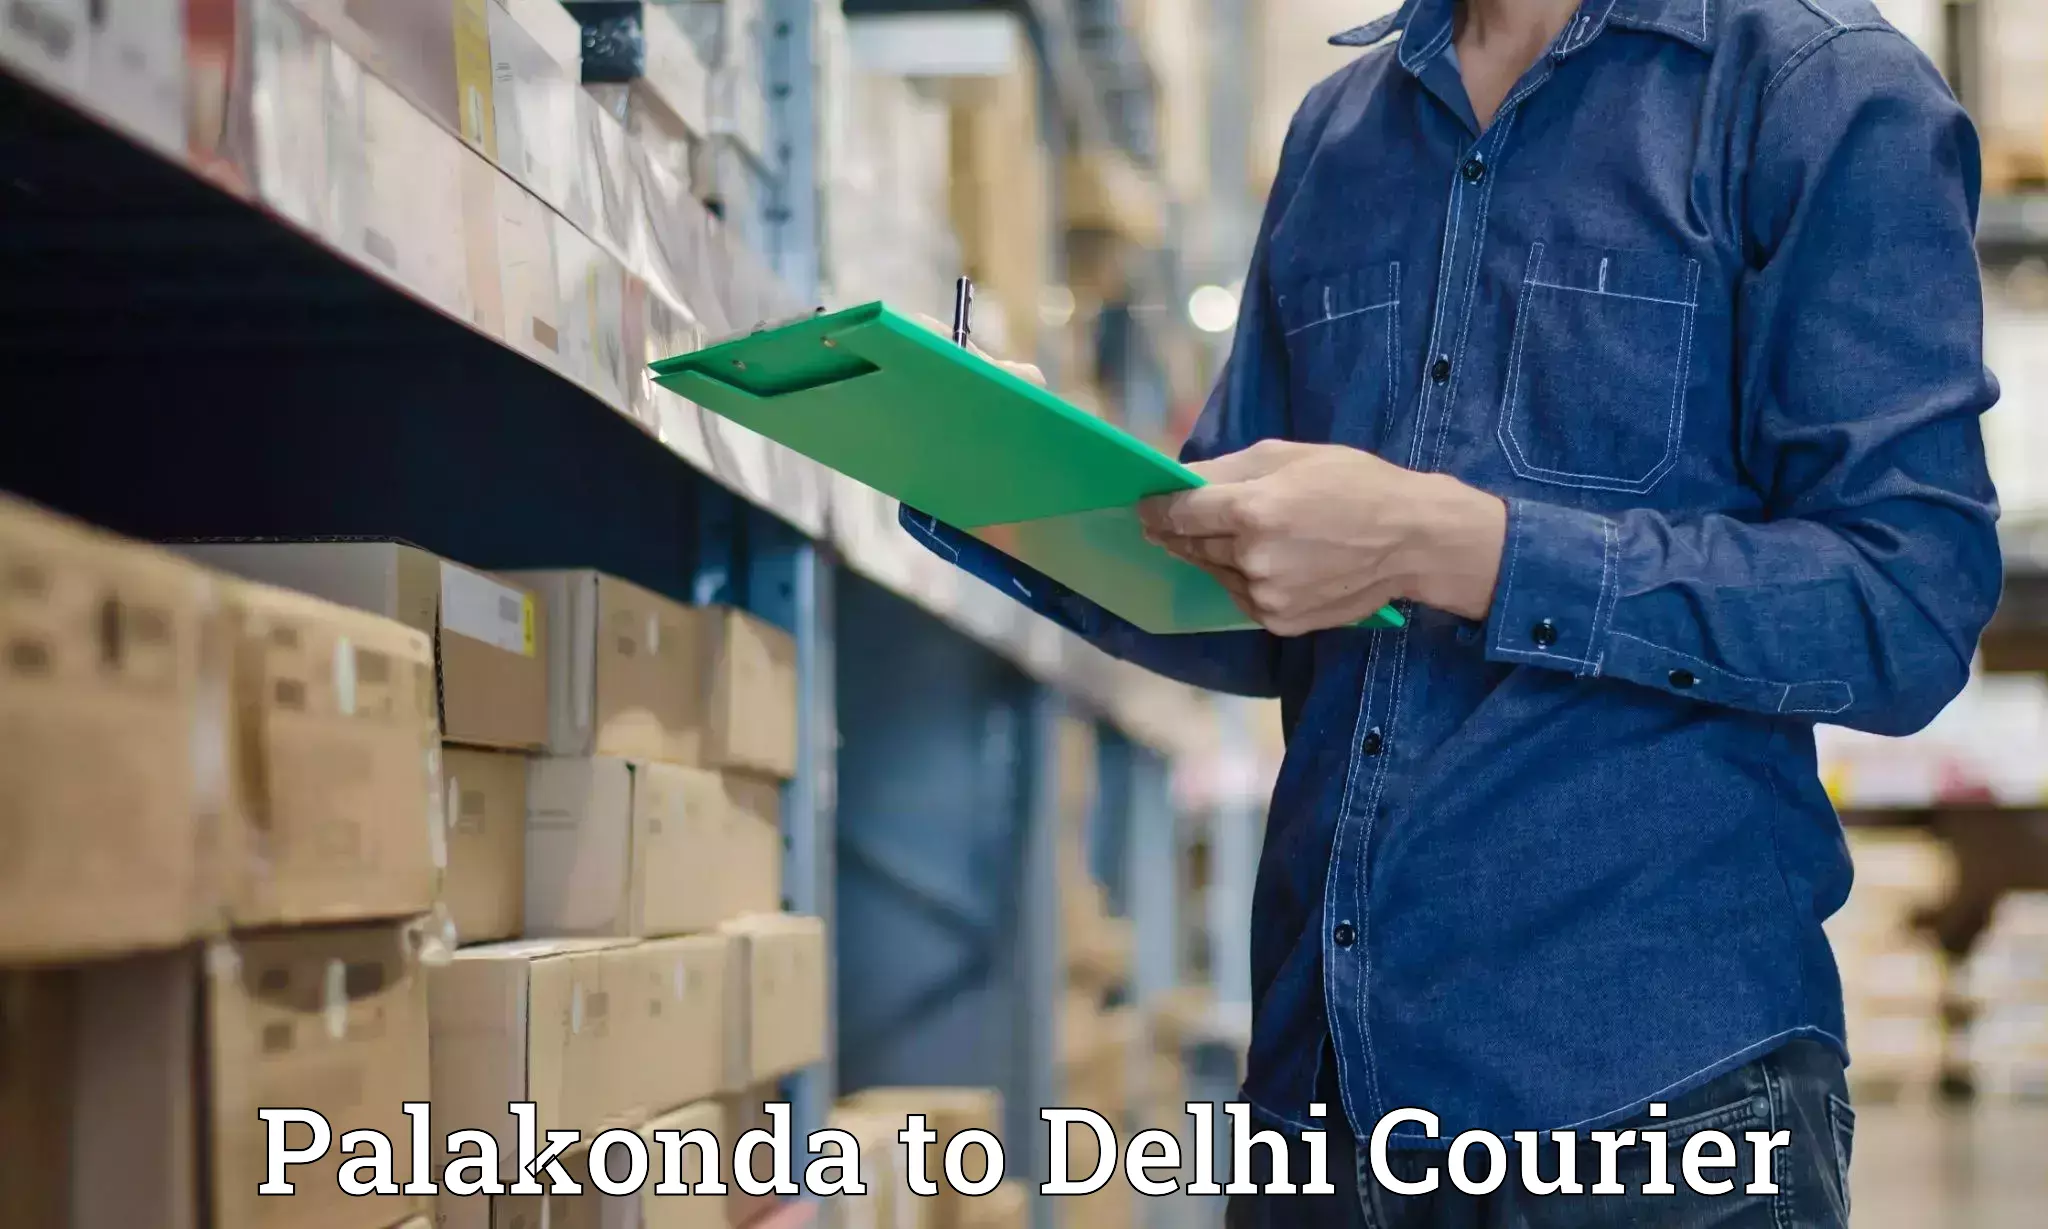 Efficient order fulfillment Palakonda to University of Delhi